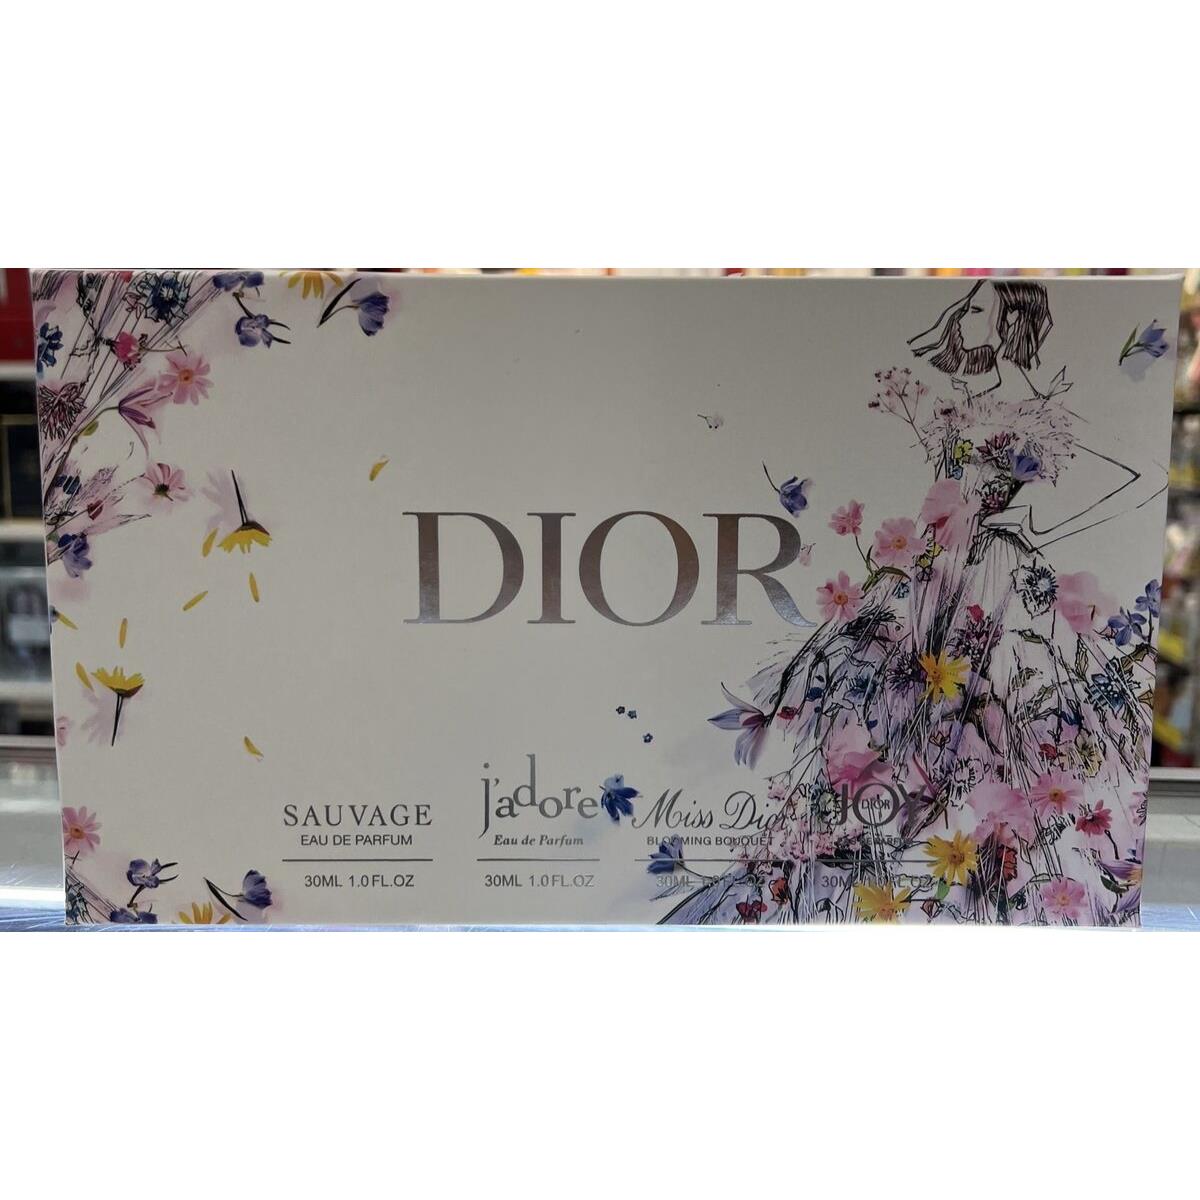 Dior perfume gift set Collections 4 x 1.0 oz 30 ml each Set